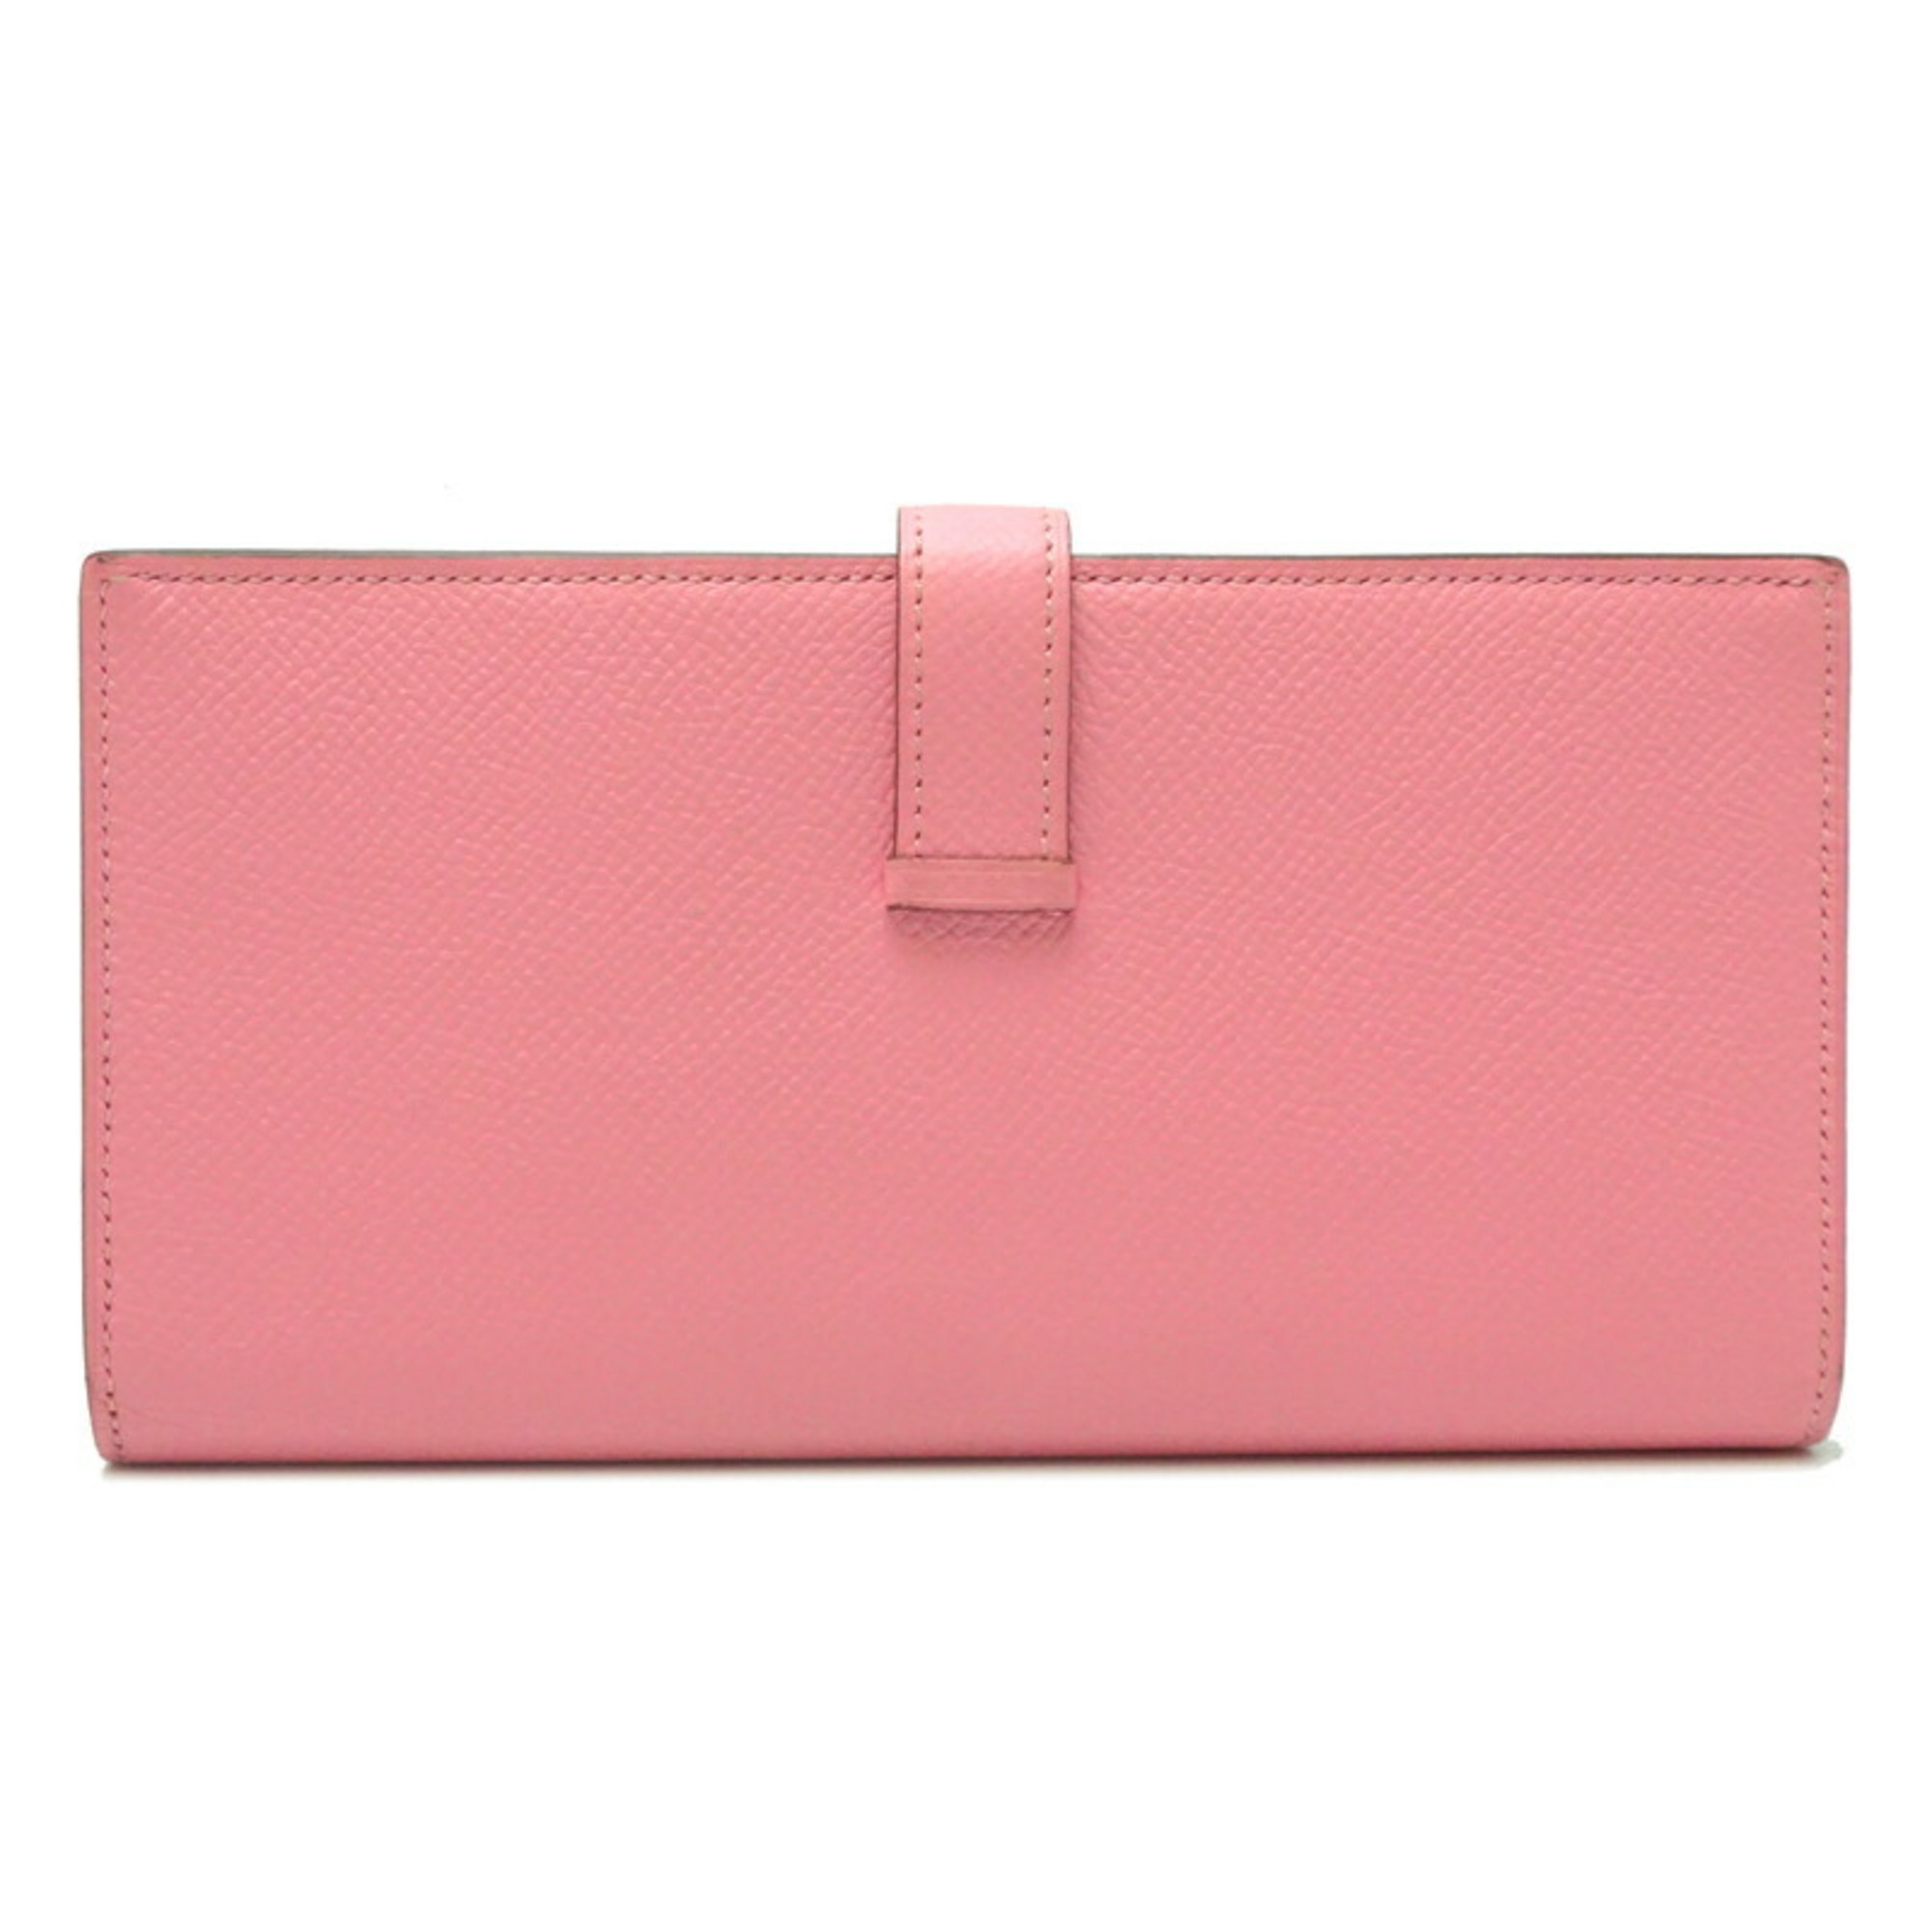 Hermes Bearn Soufflet R stamp, unclear women's long wallet, Epsom leather, rose confetti (pink)